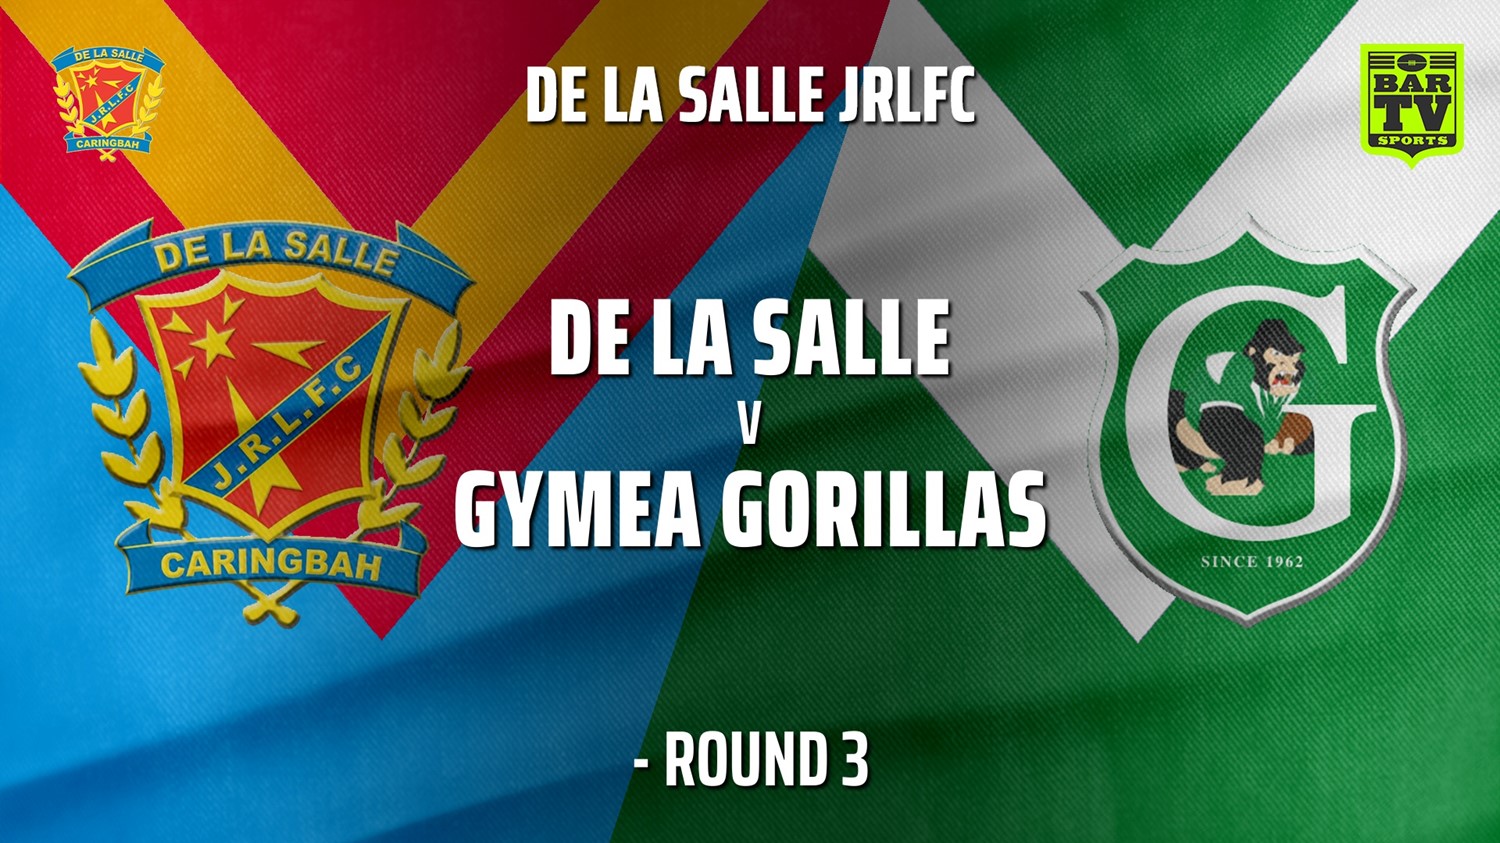 210515-De La Salle - Over 35 Blues Tag - Round 3 - De La Salle v Gymea Gorillas Slate Image